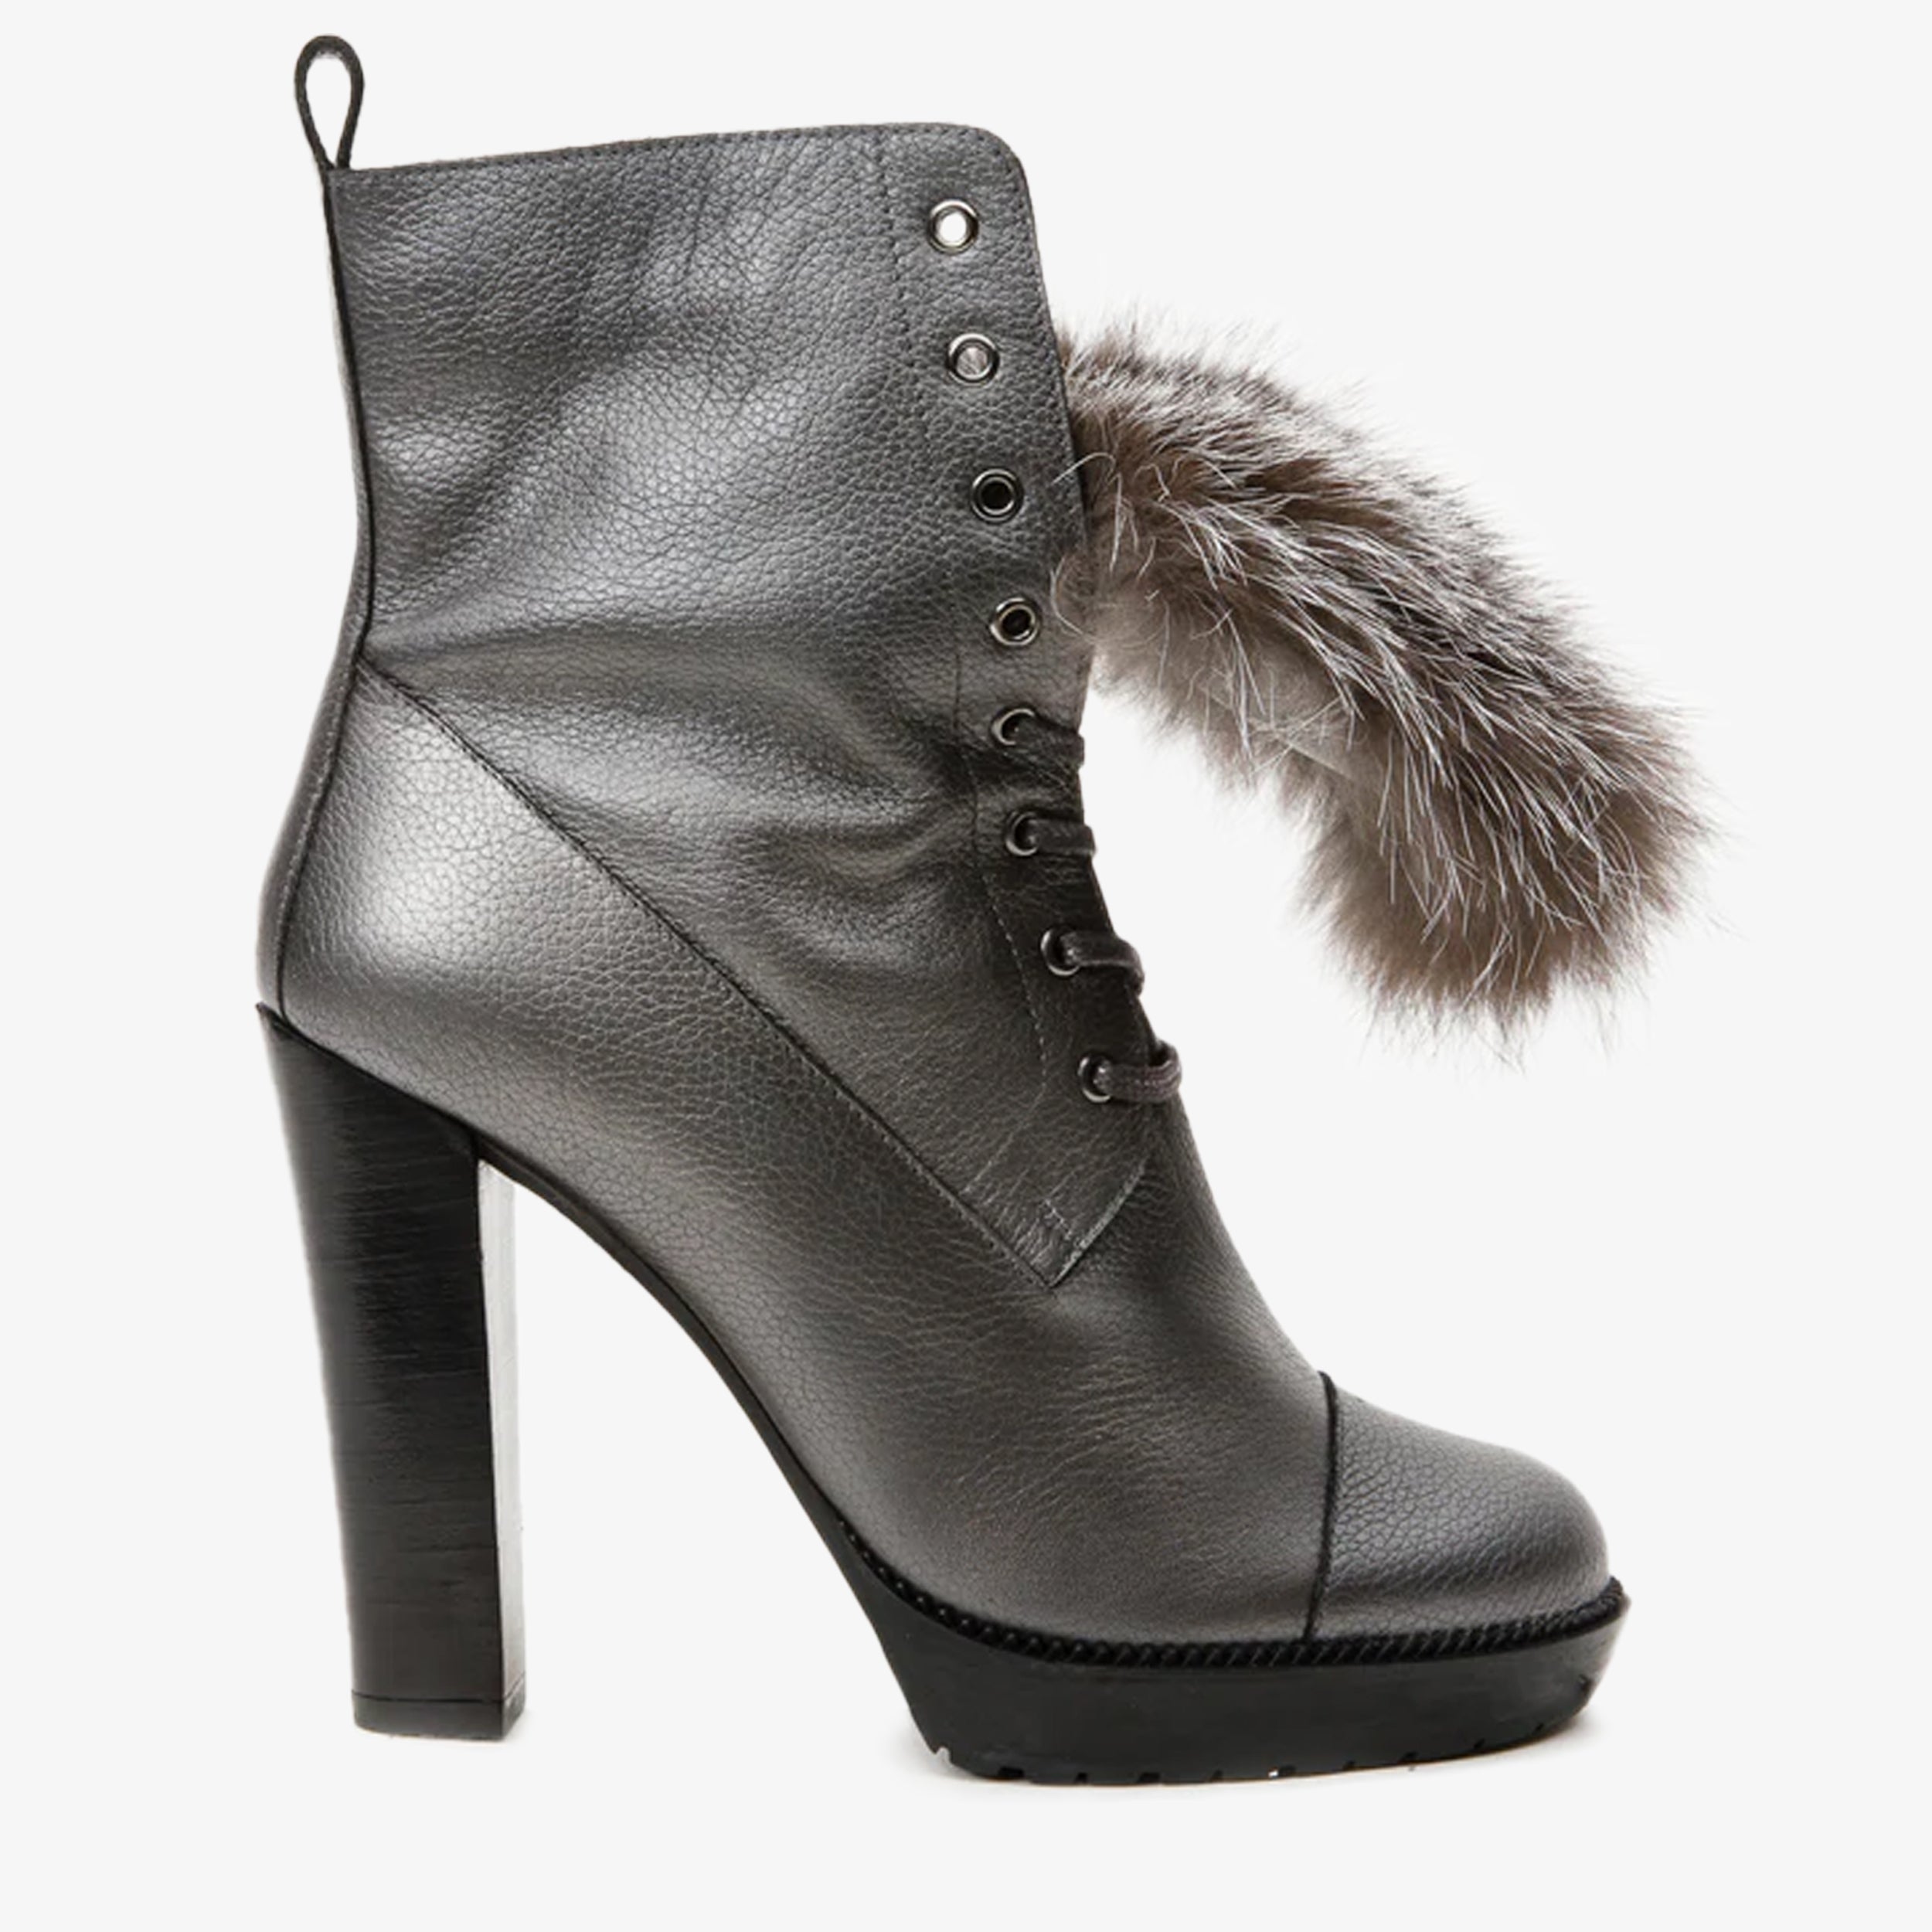 ComeShun Kitten Heel Mid Calf Boots Classic Wrinkle Vamp Slip On Booties  Black Size 3: Amazon.co.uk: Fashion